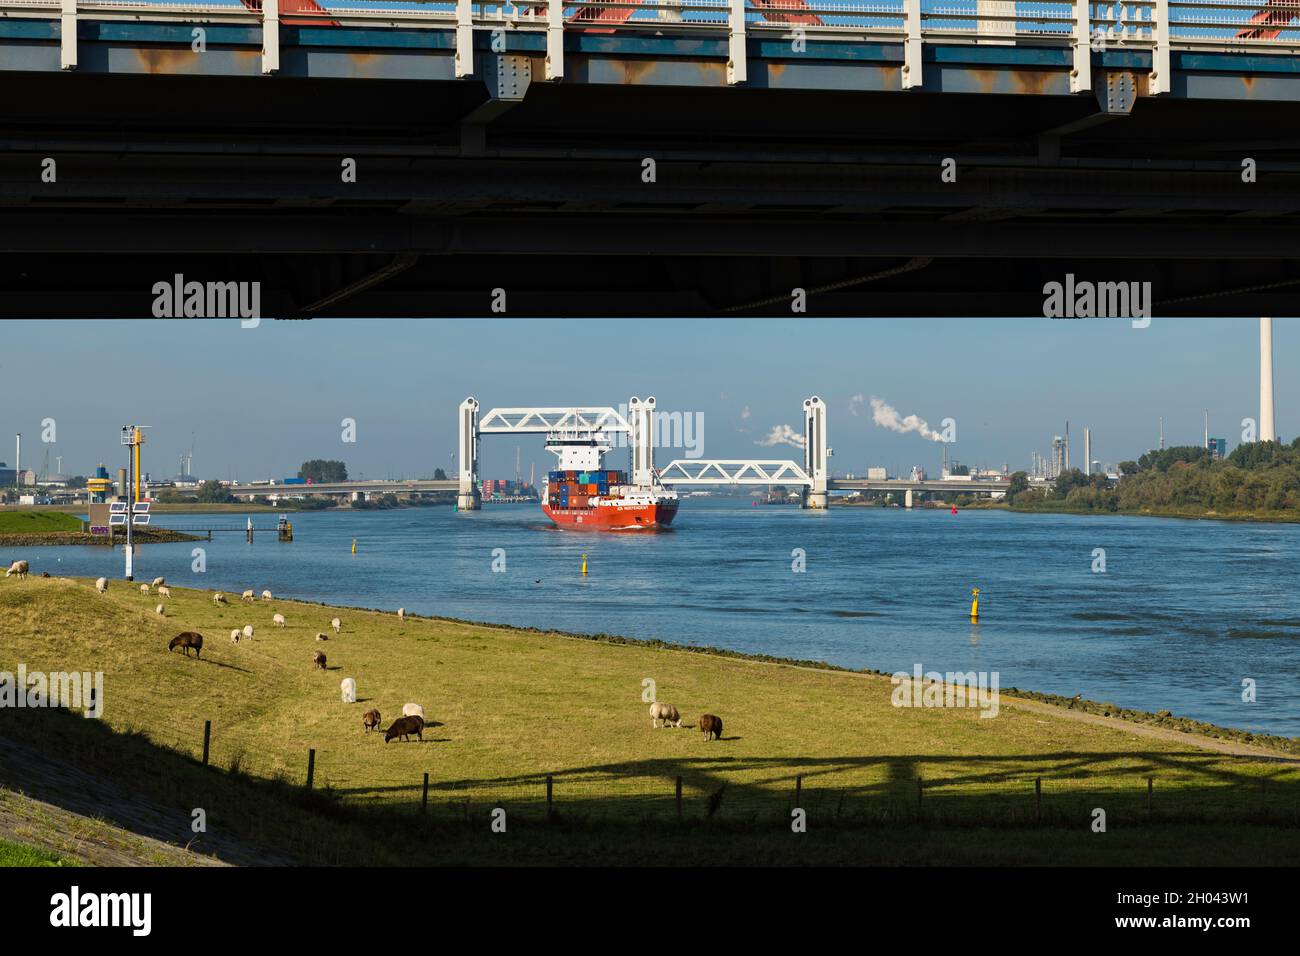 container ship crossing the the new botlek bridge near rotterdam Stock Photo